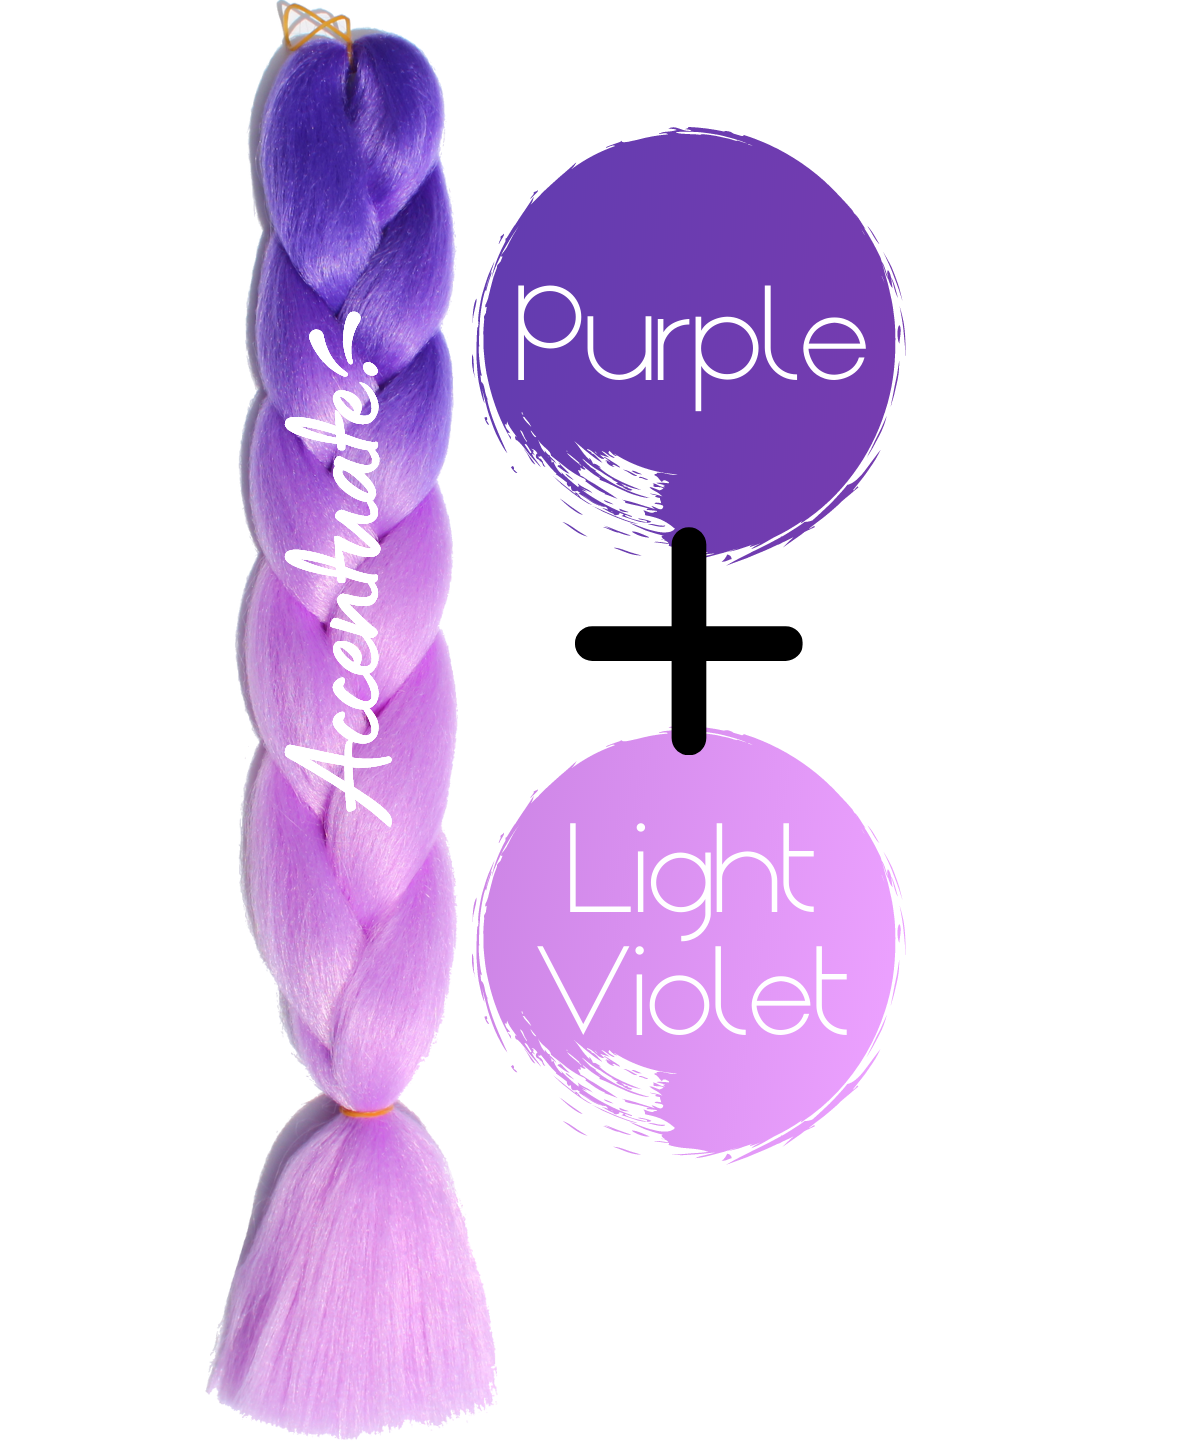 24" Purple + Light Violet Ombré Jumbo Braid Hair Extension